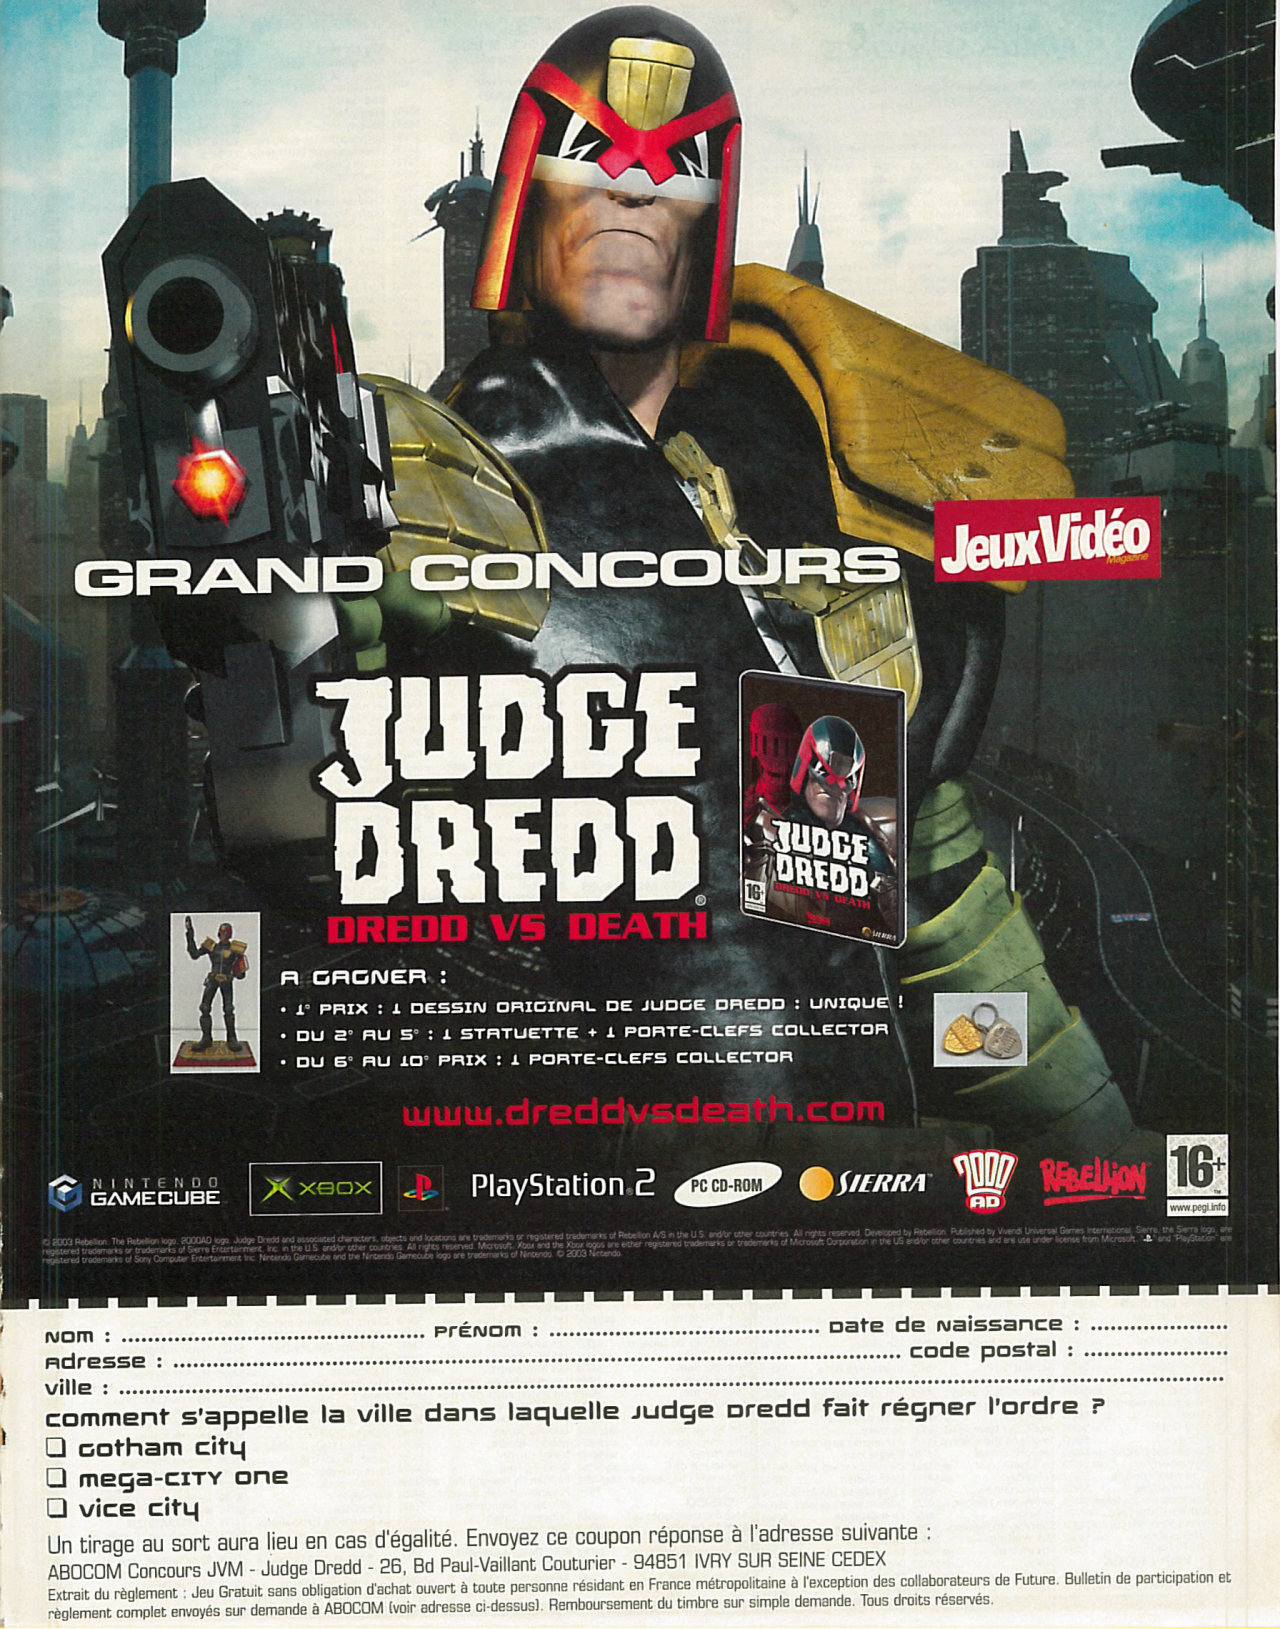 ‘Judge Dredd: Dredd vs. Death - ‘Grand Concours’’[PC / GCN / XBOX / PS2] [FRANCE] [MAGAZINE, CONTEST] [2003]
• Jeux Vidéo Magazine, October 2003 (#36)
• via Abandonware Magazines
• Want to score some unique Judge Dredd collectibles, just answer this...